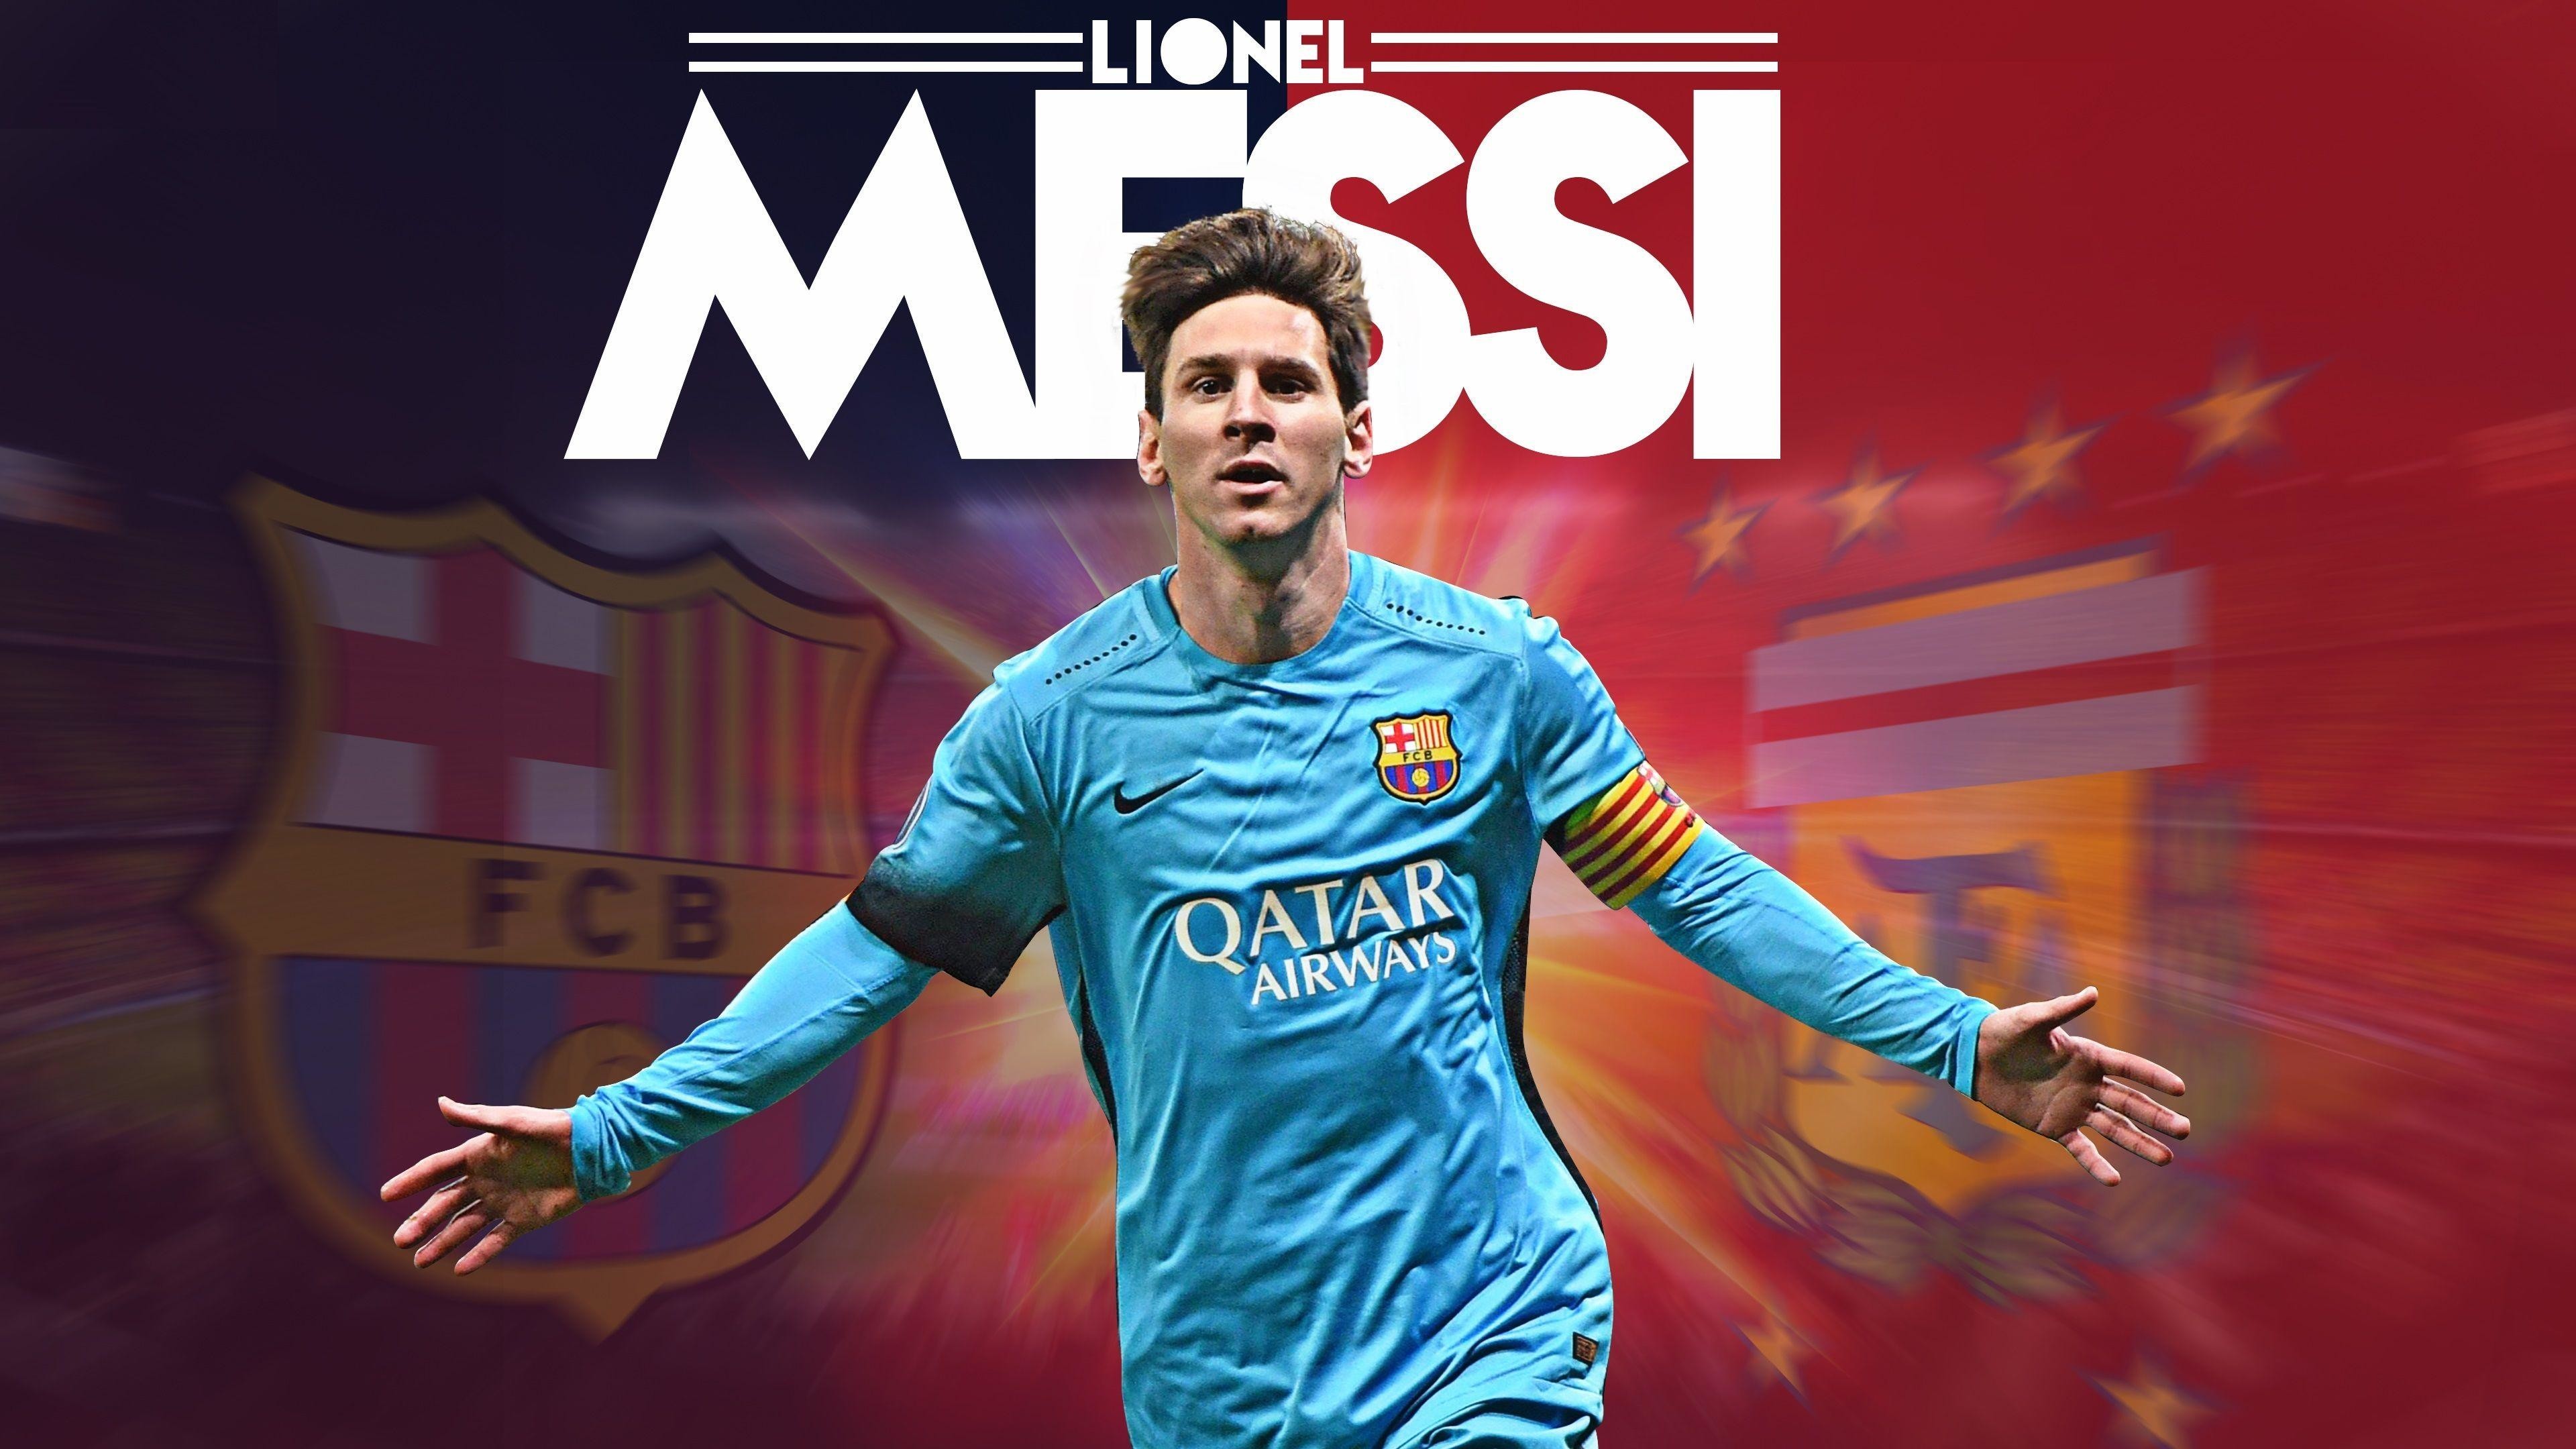 Lionel Messi FCB HD 4K